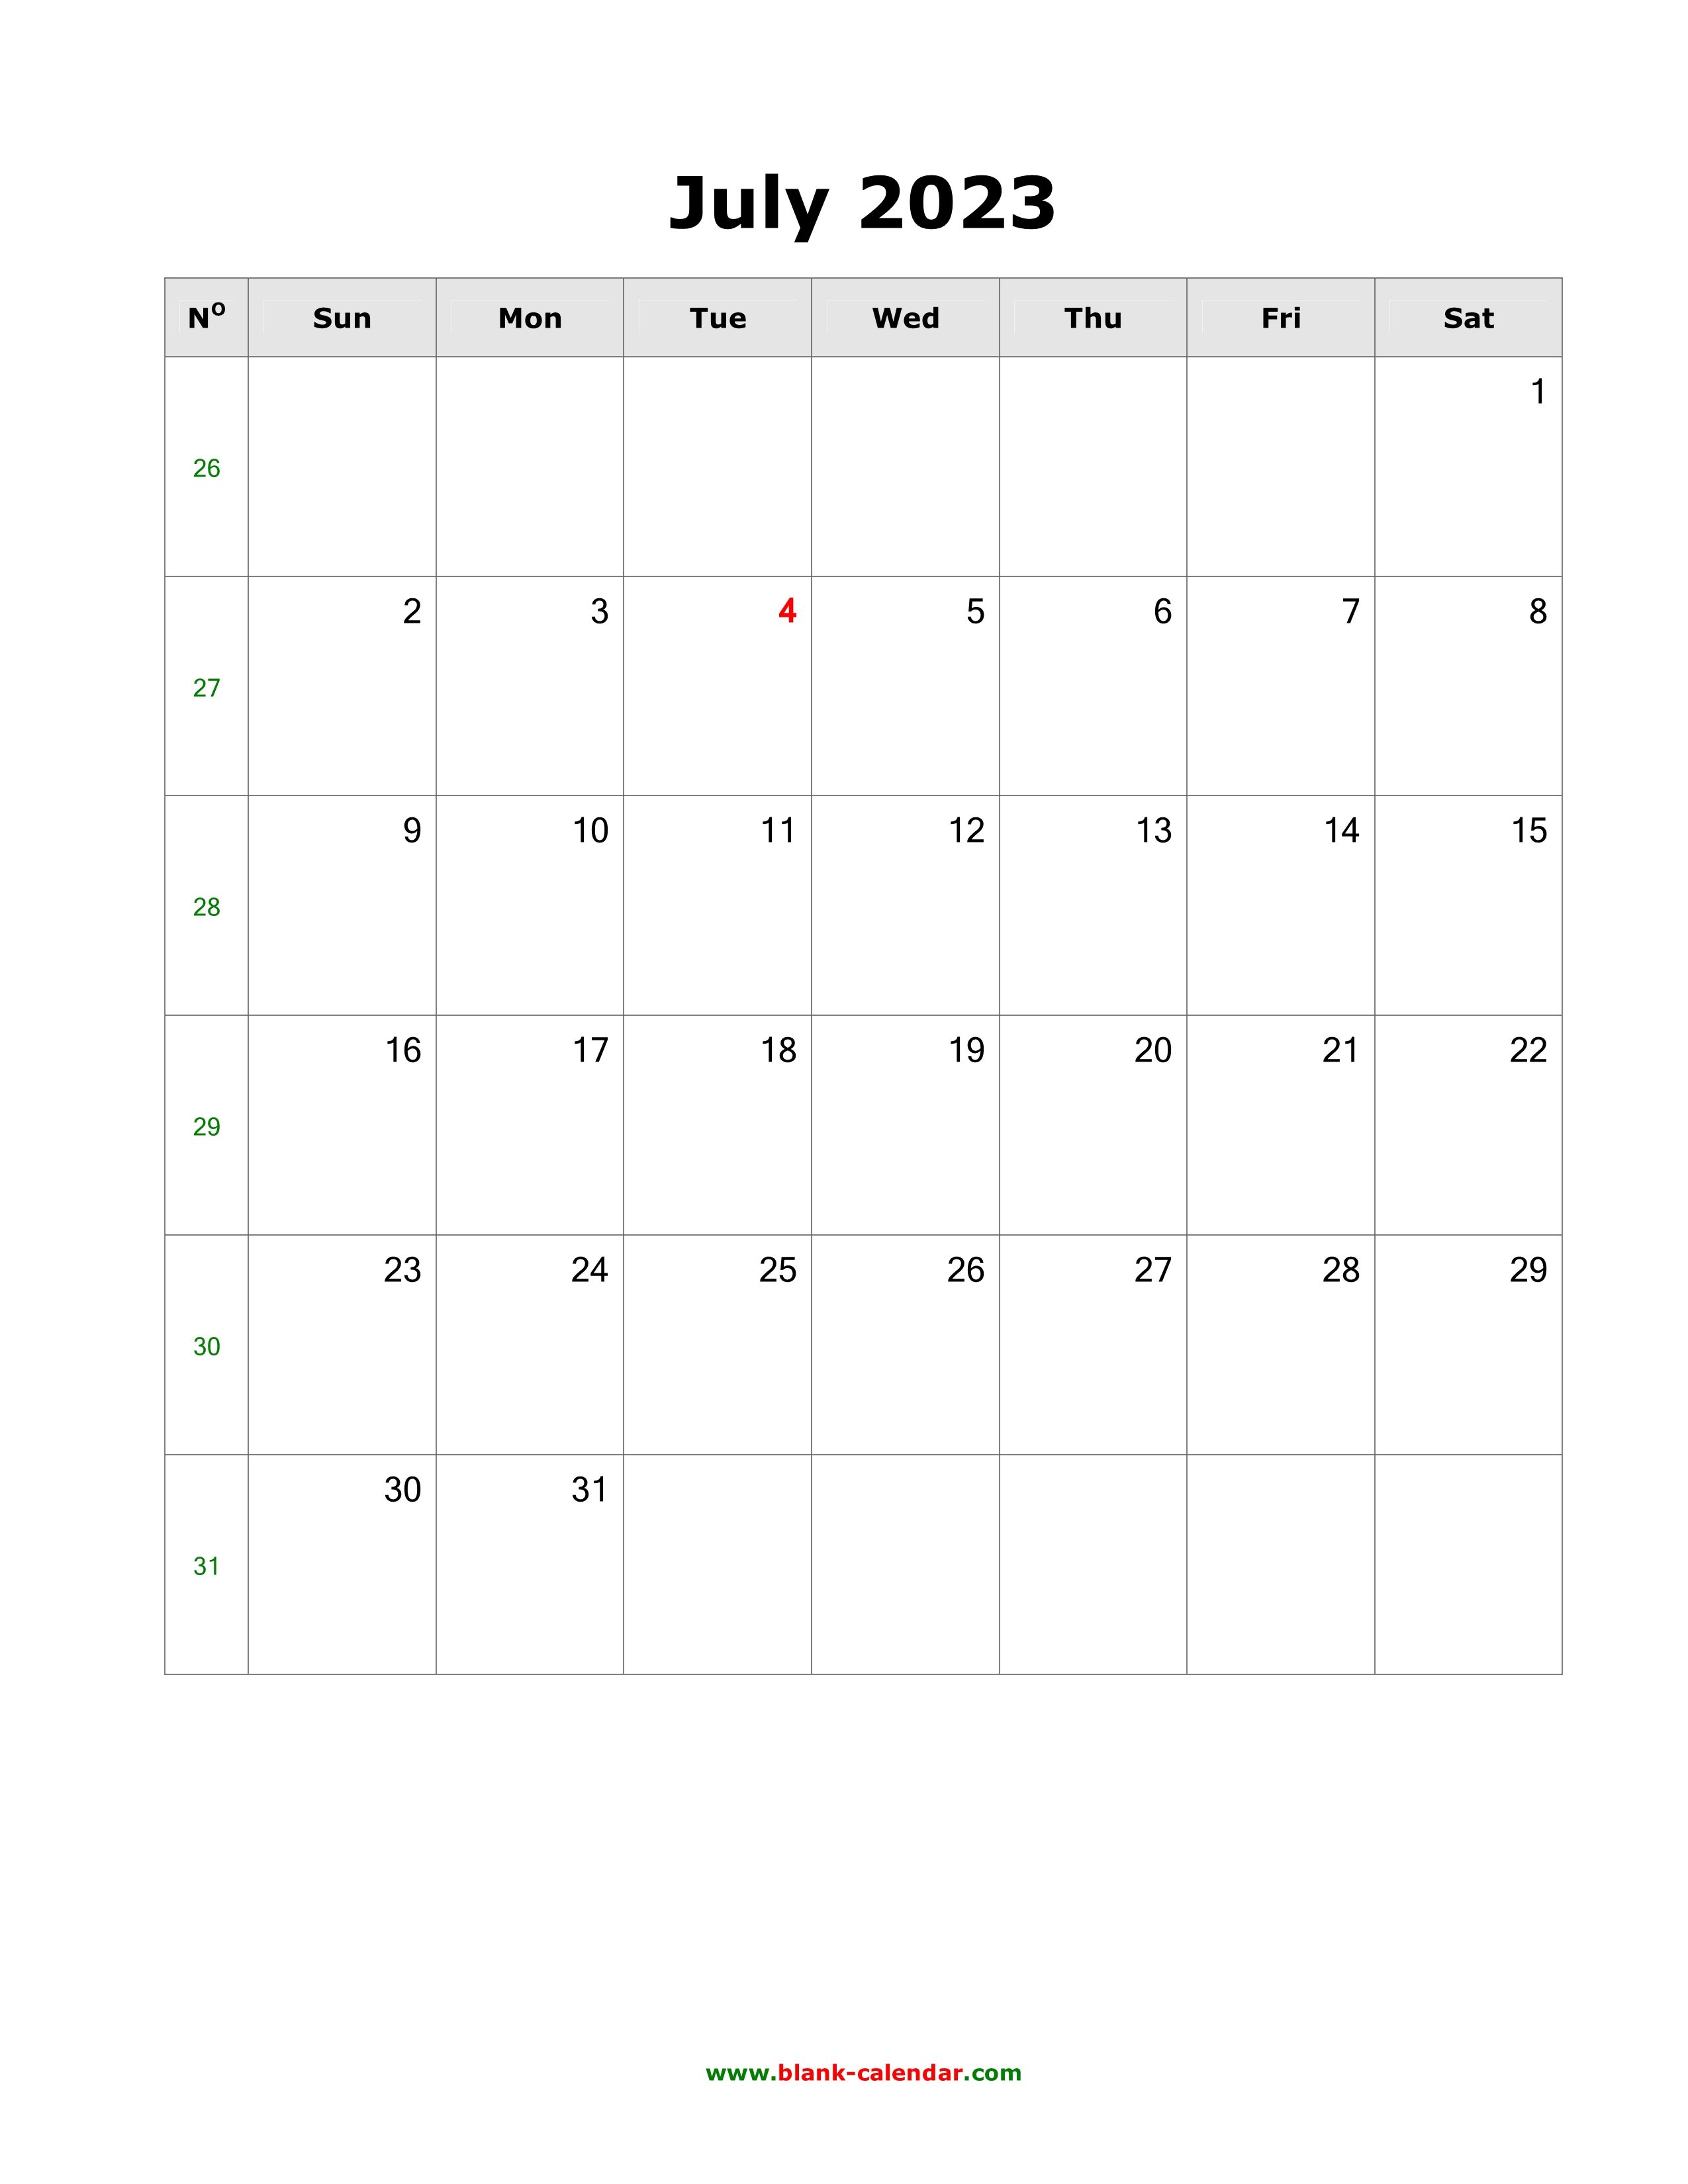 Download July 2023 Blank Calendar (vertical)